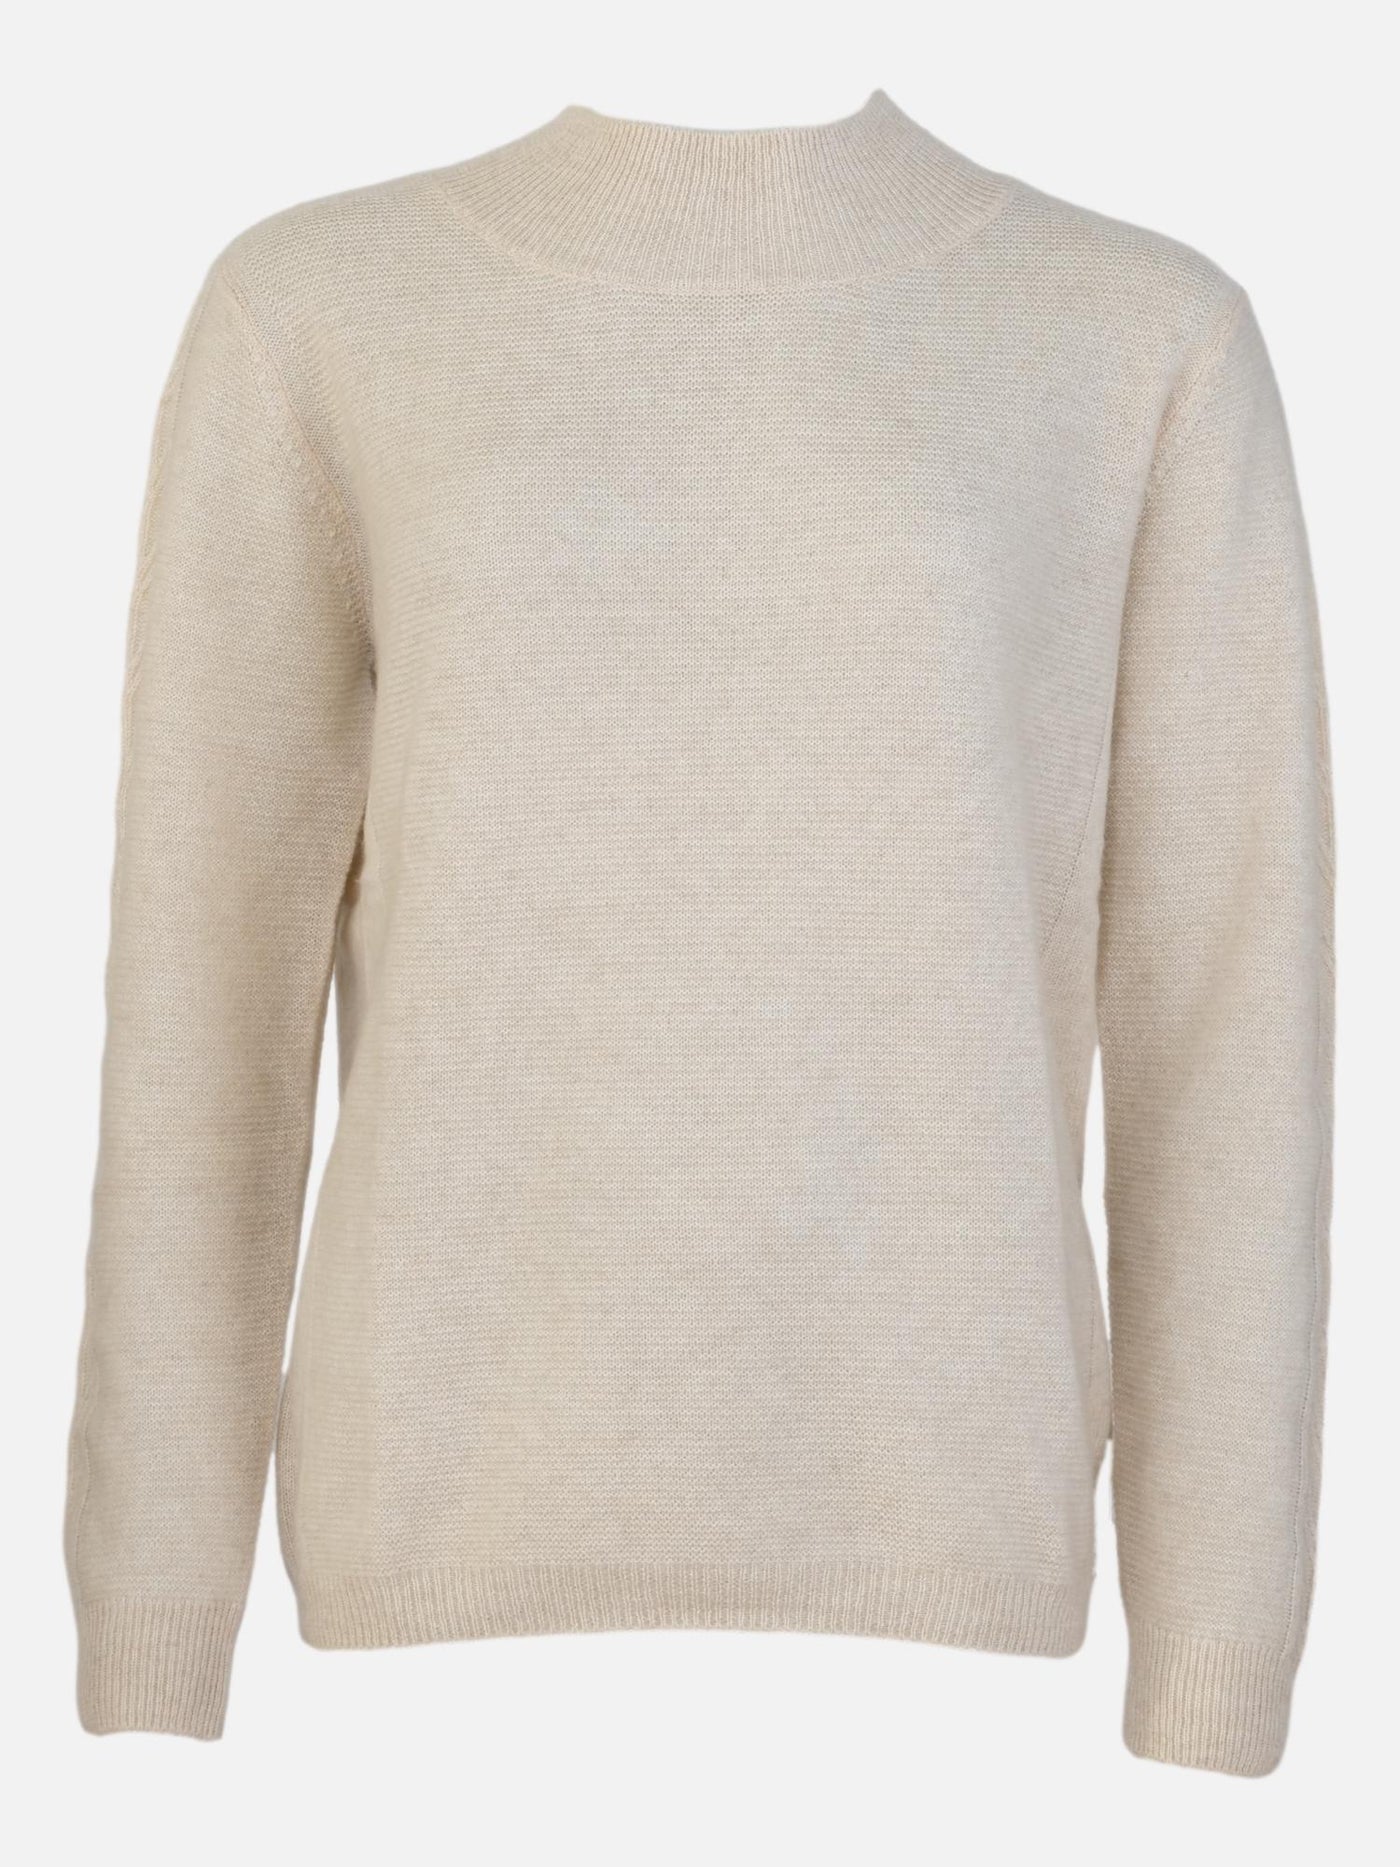 MKI Sweater - 100% Cashmere - Accesories - Light Beige